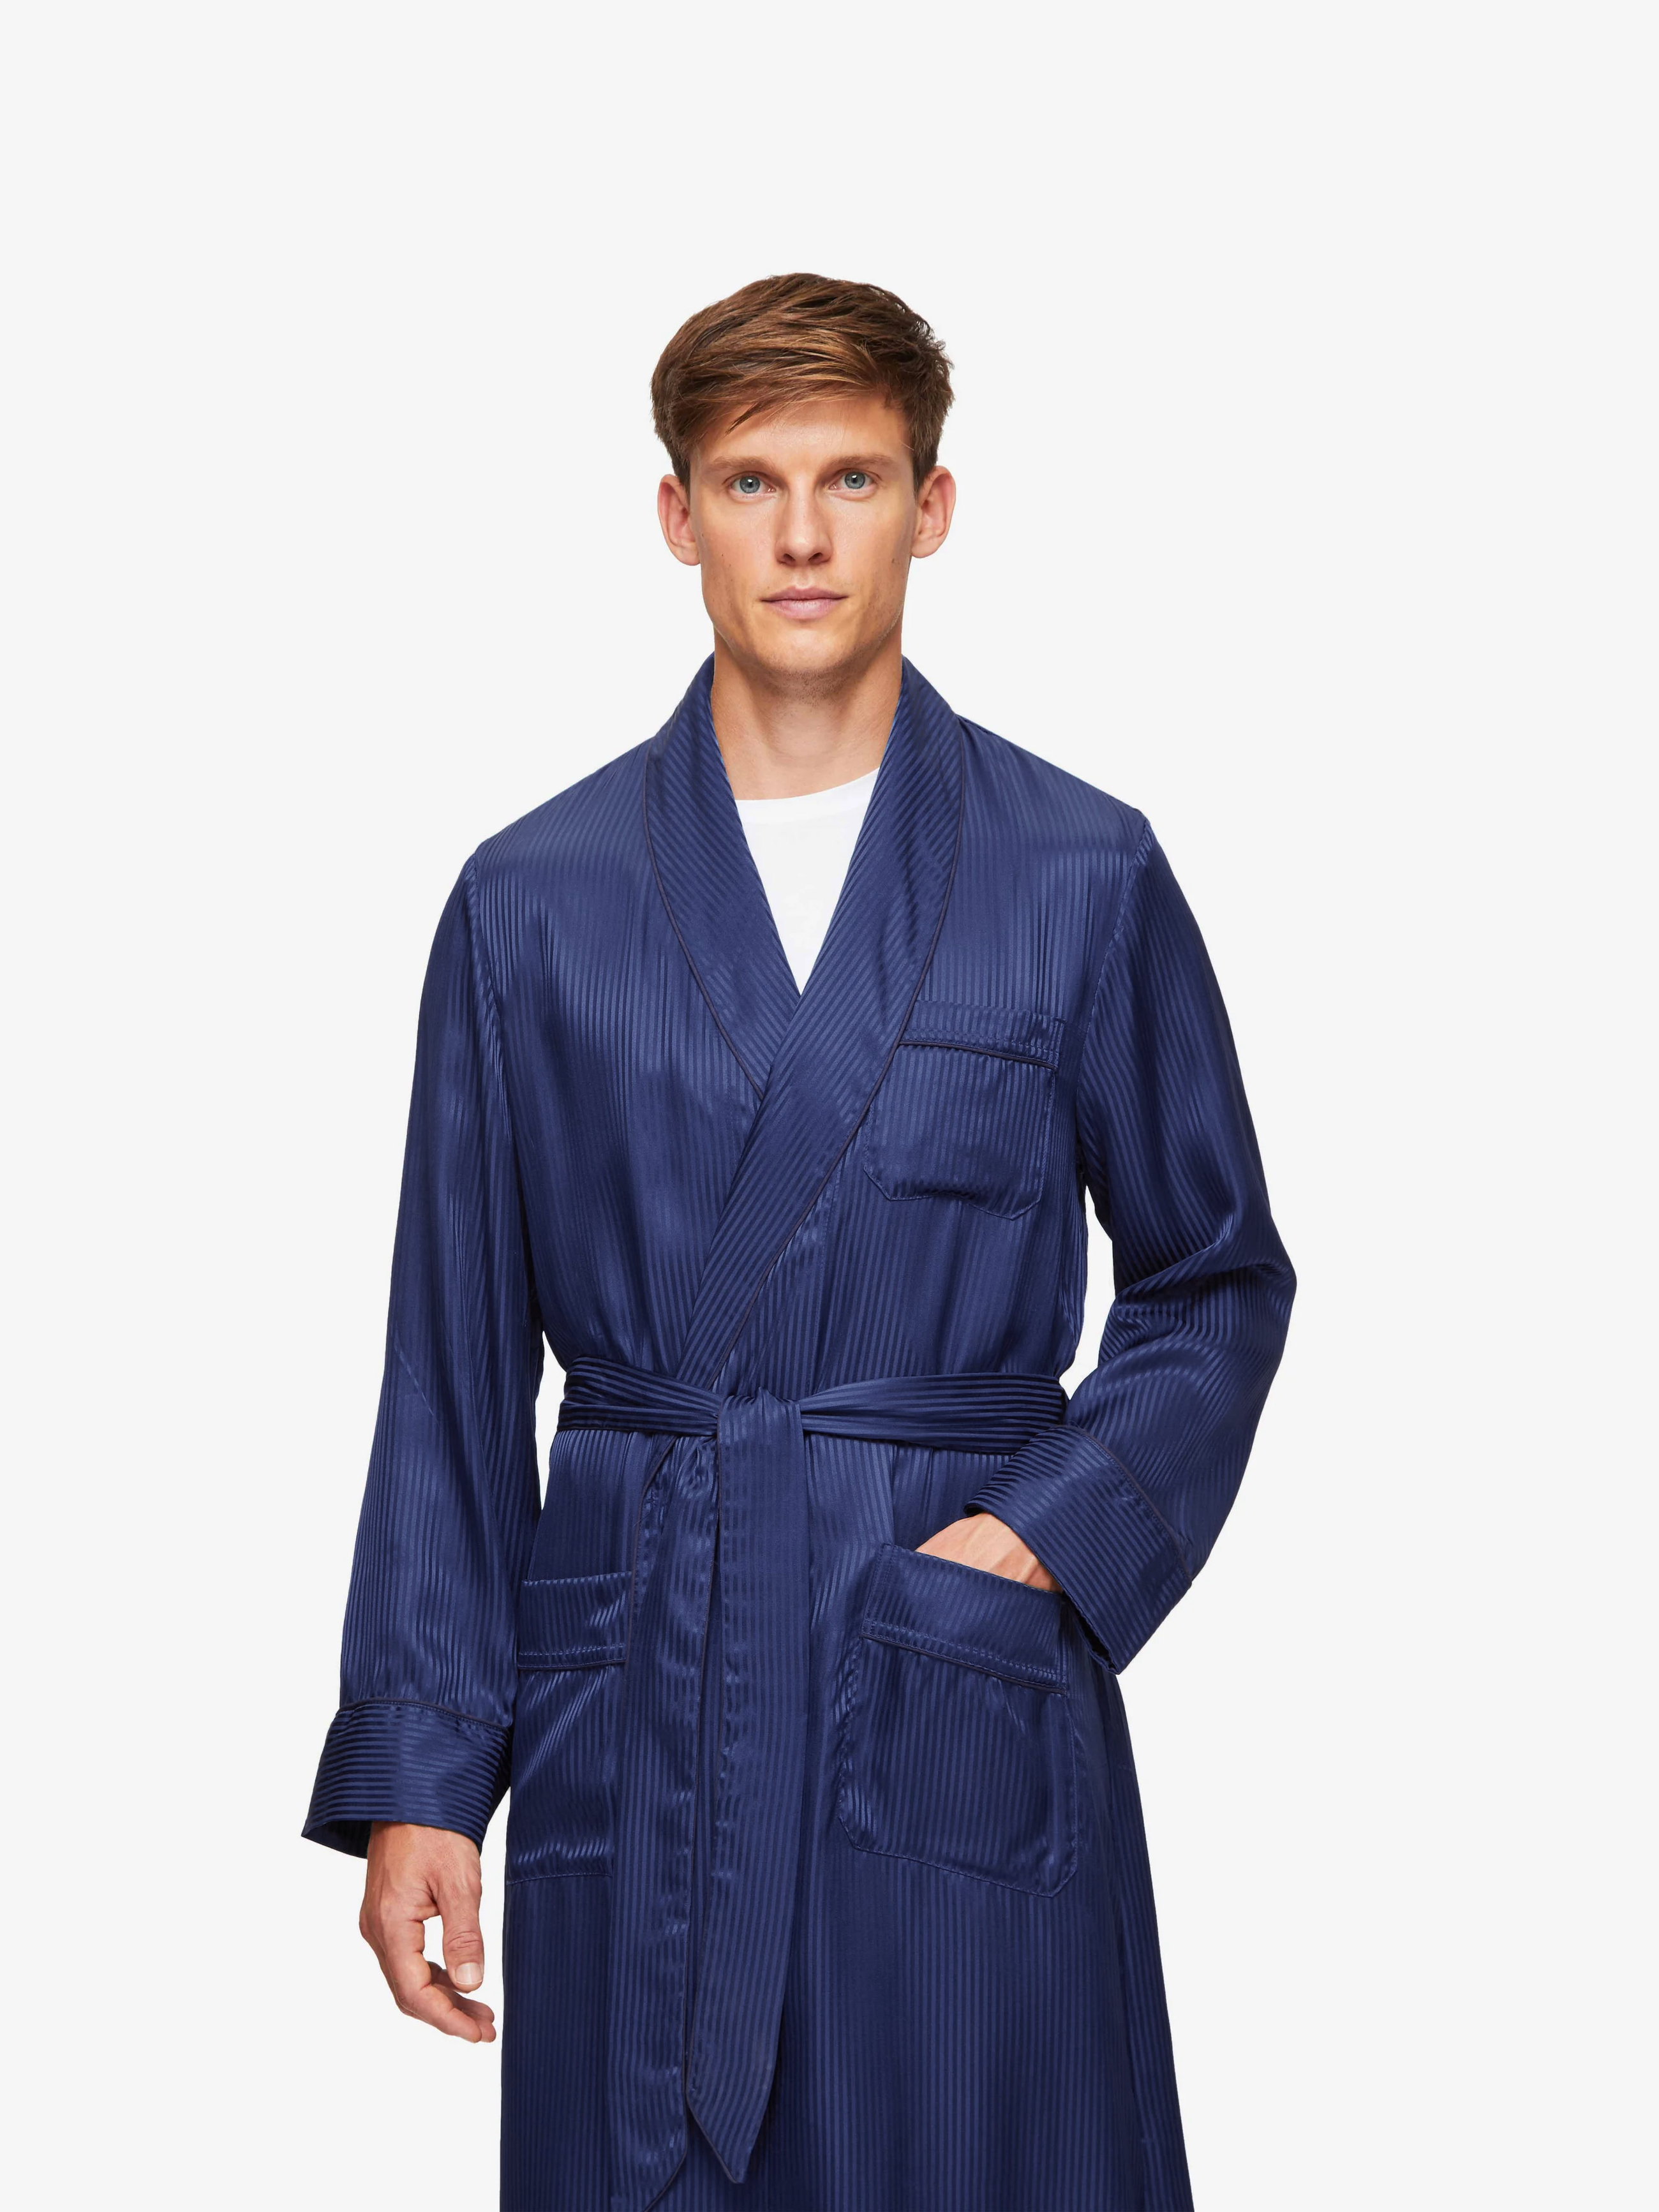 HOGJIM bathrobe Bathrobe Ankle Length Robe Pajamas Long Sleeve Soft Men  Coral Fleece Long Bath Robe unisex-adult (Color : Black, Size : 3X-Large)  at Amazon Women's Clothing store